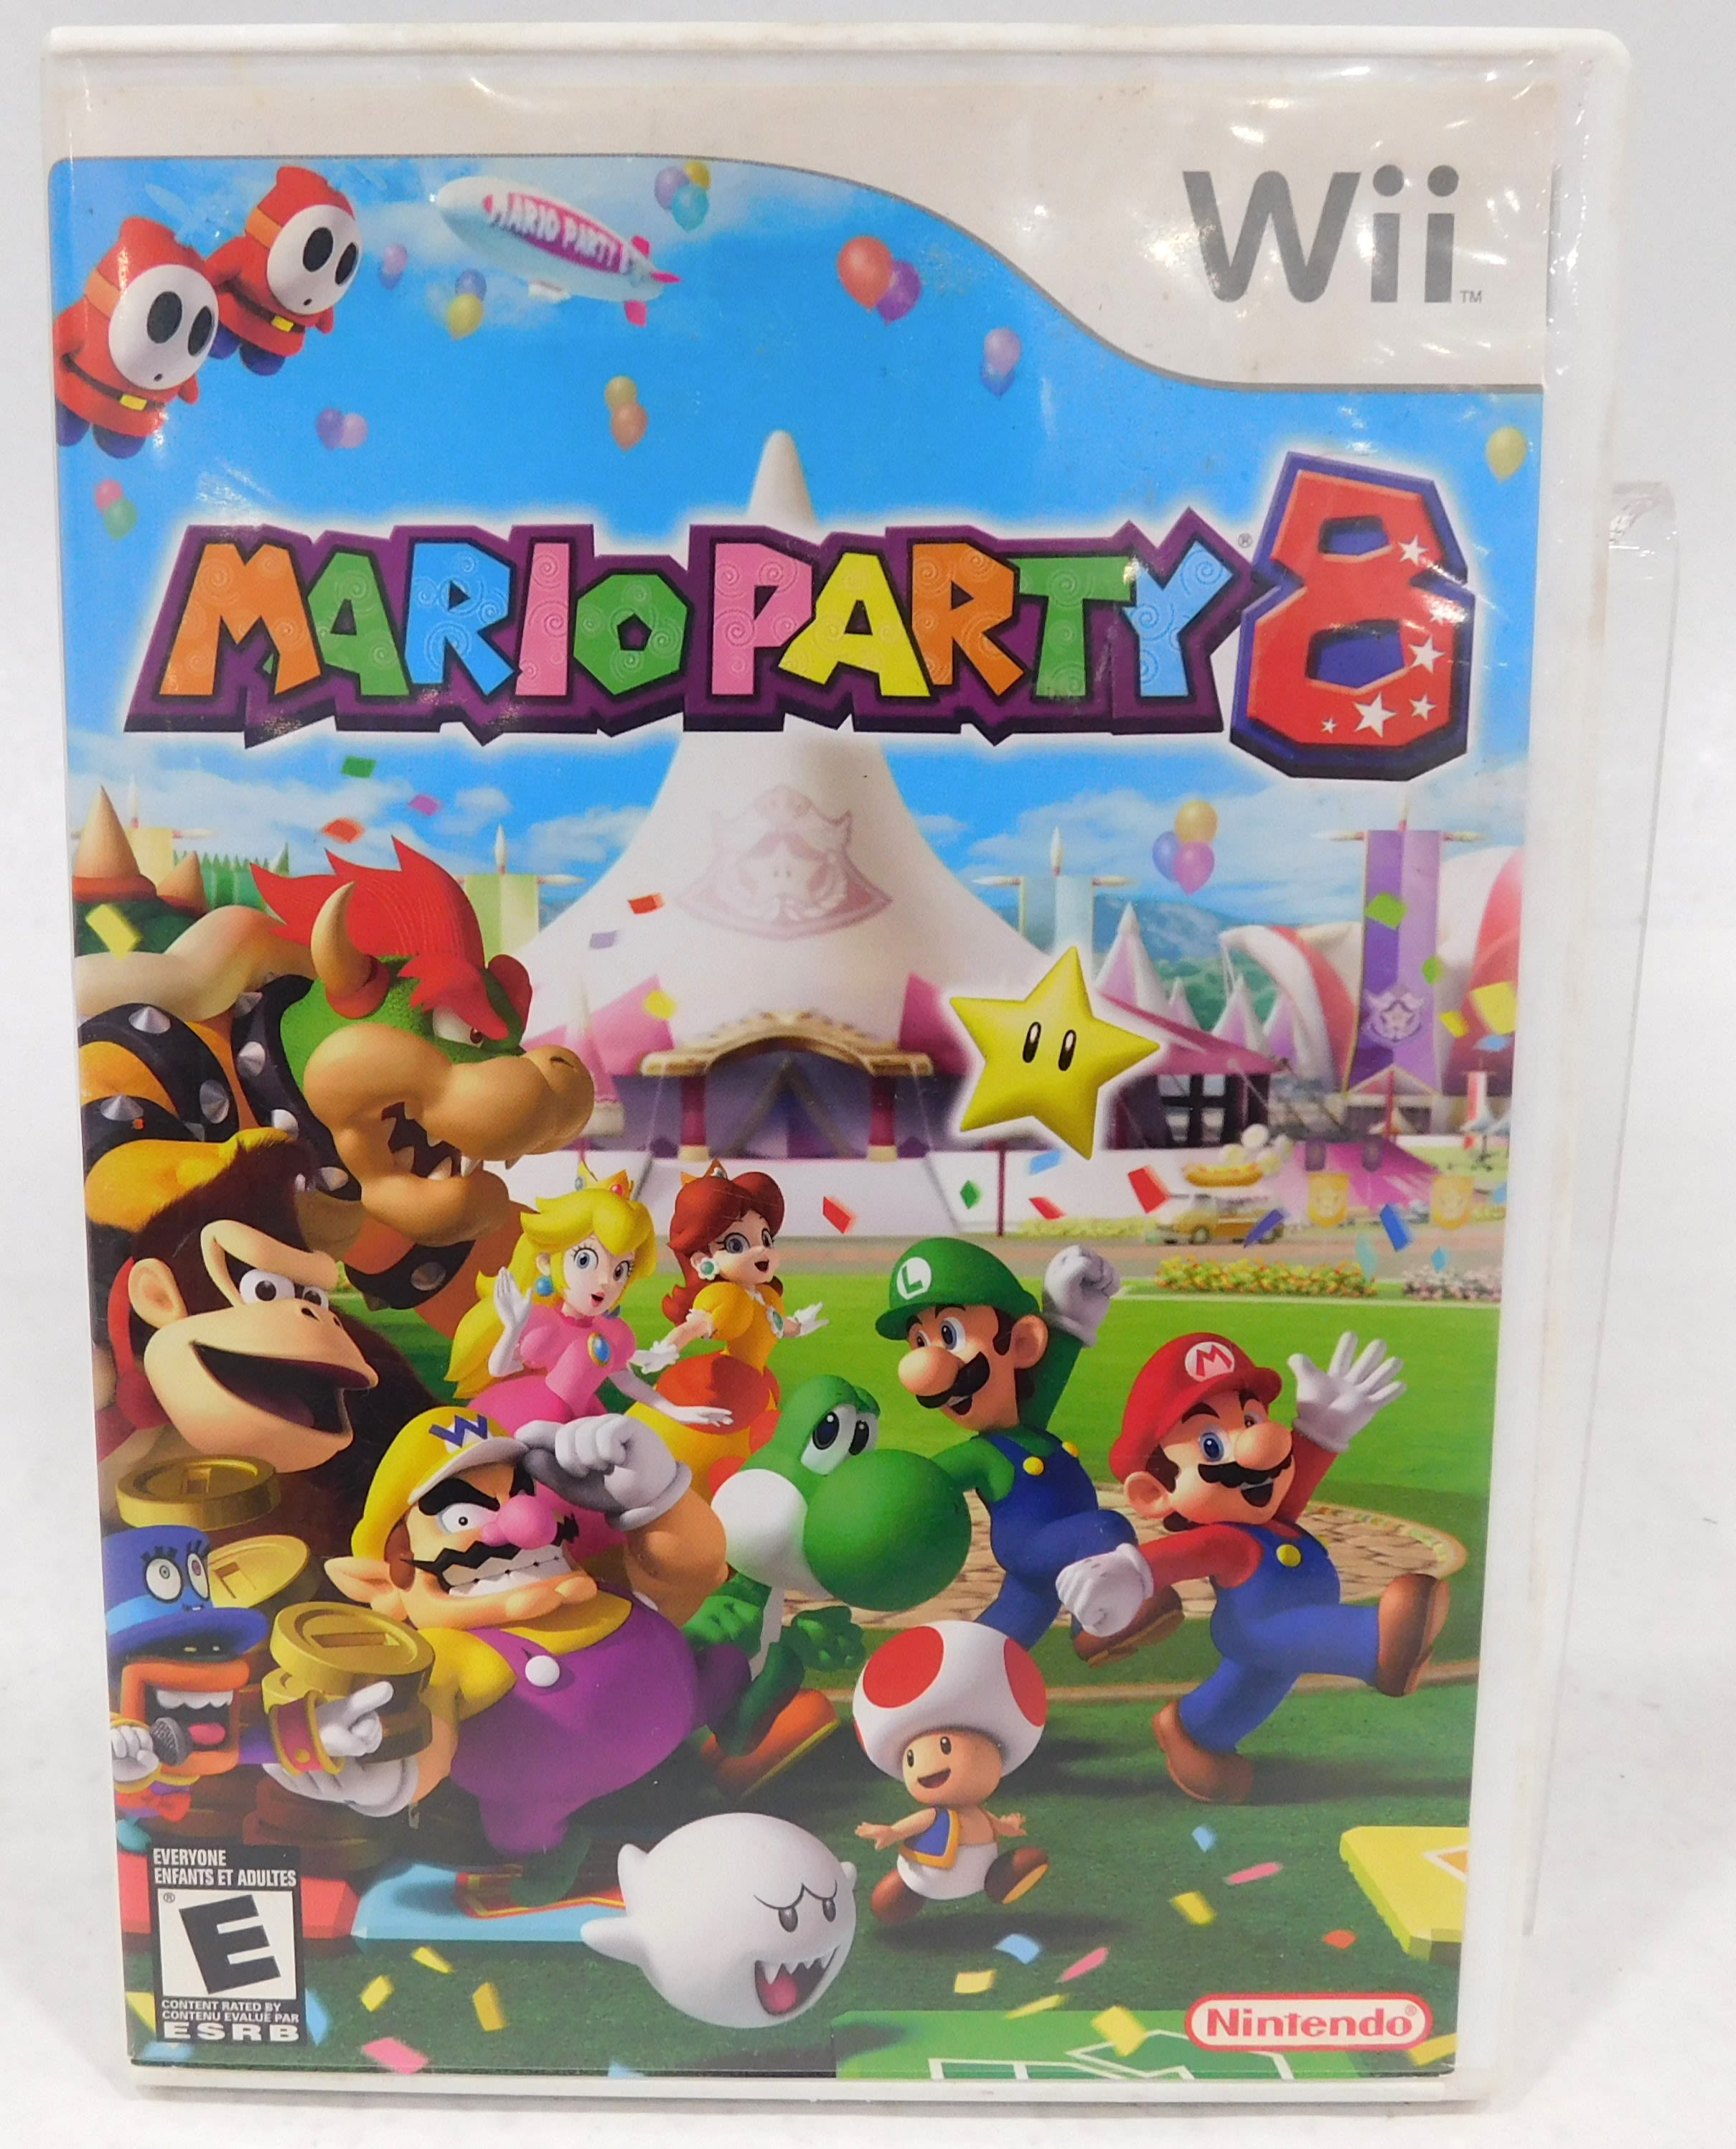 Buy The Mario Party 8 Nintendo Wii Cib Goodwillfinds 1398